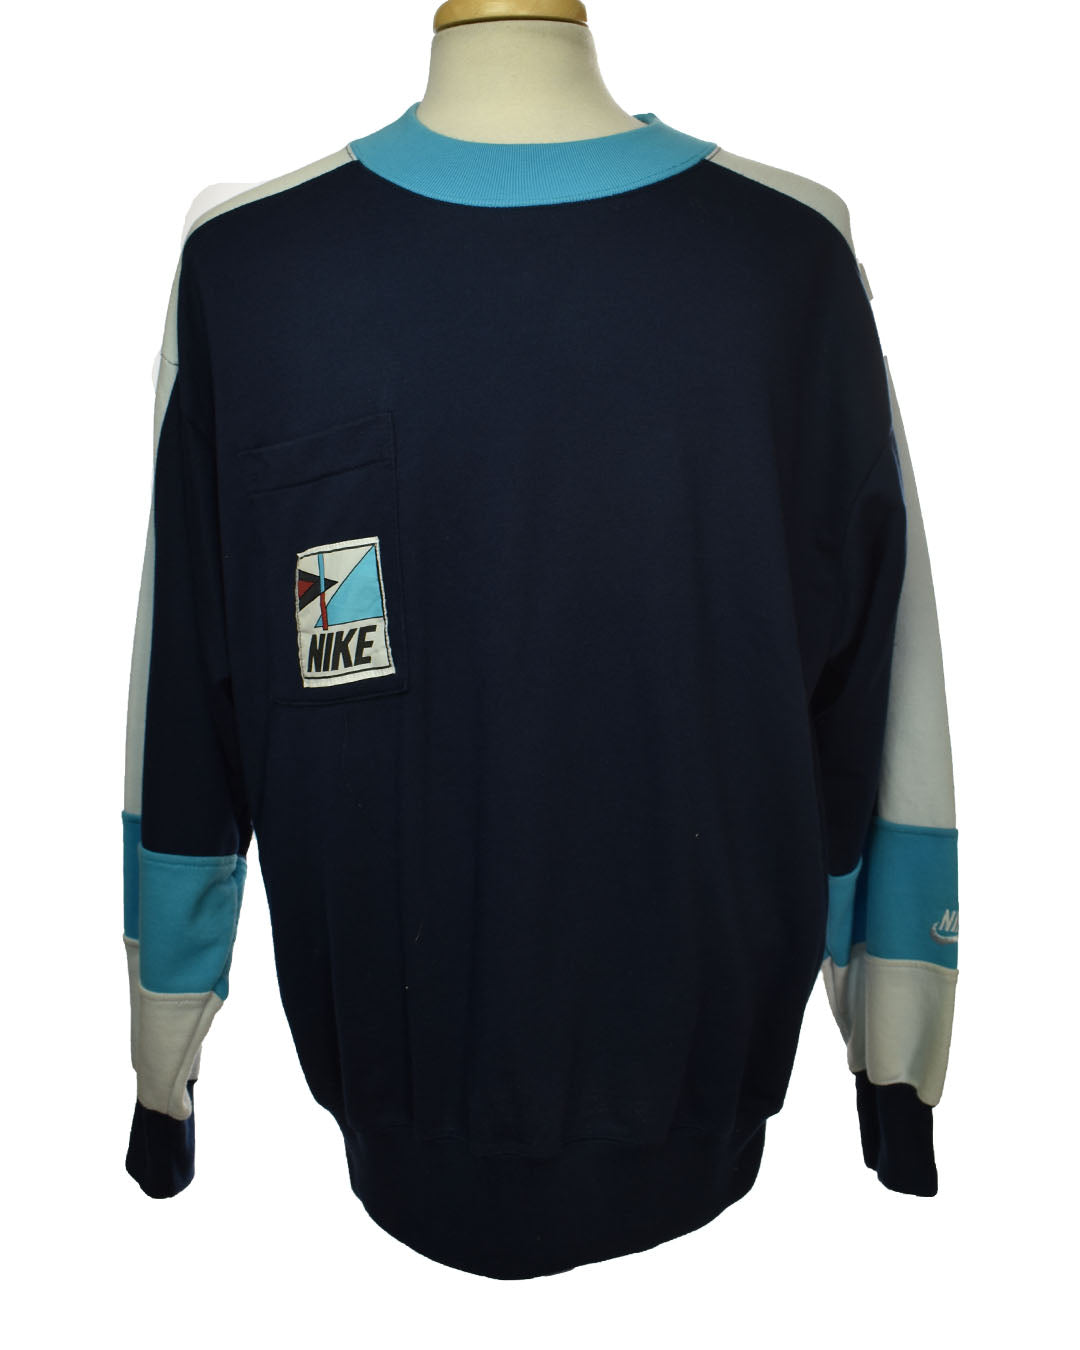 Vintage 80s Nike Crewneck Sweatshirt Size L